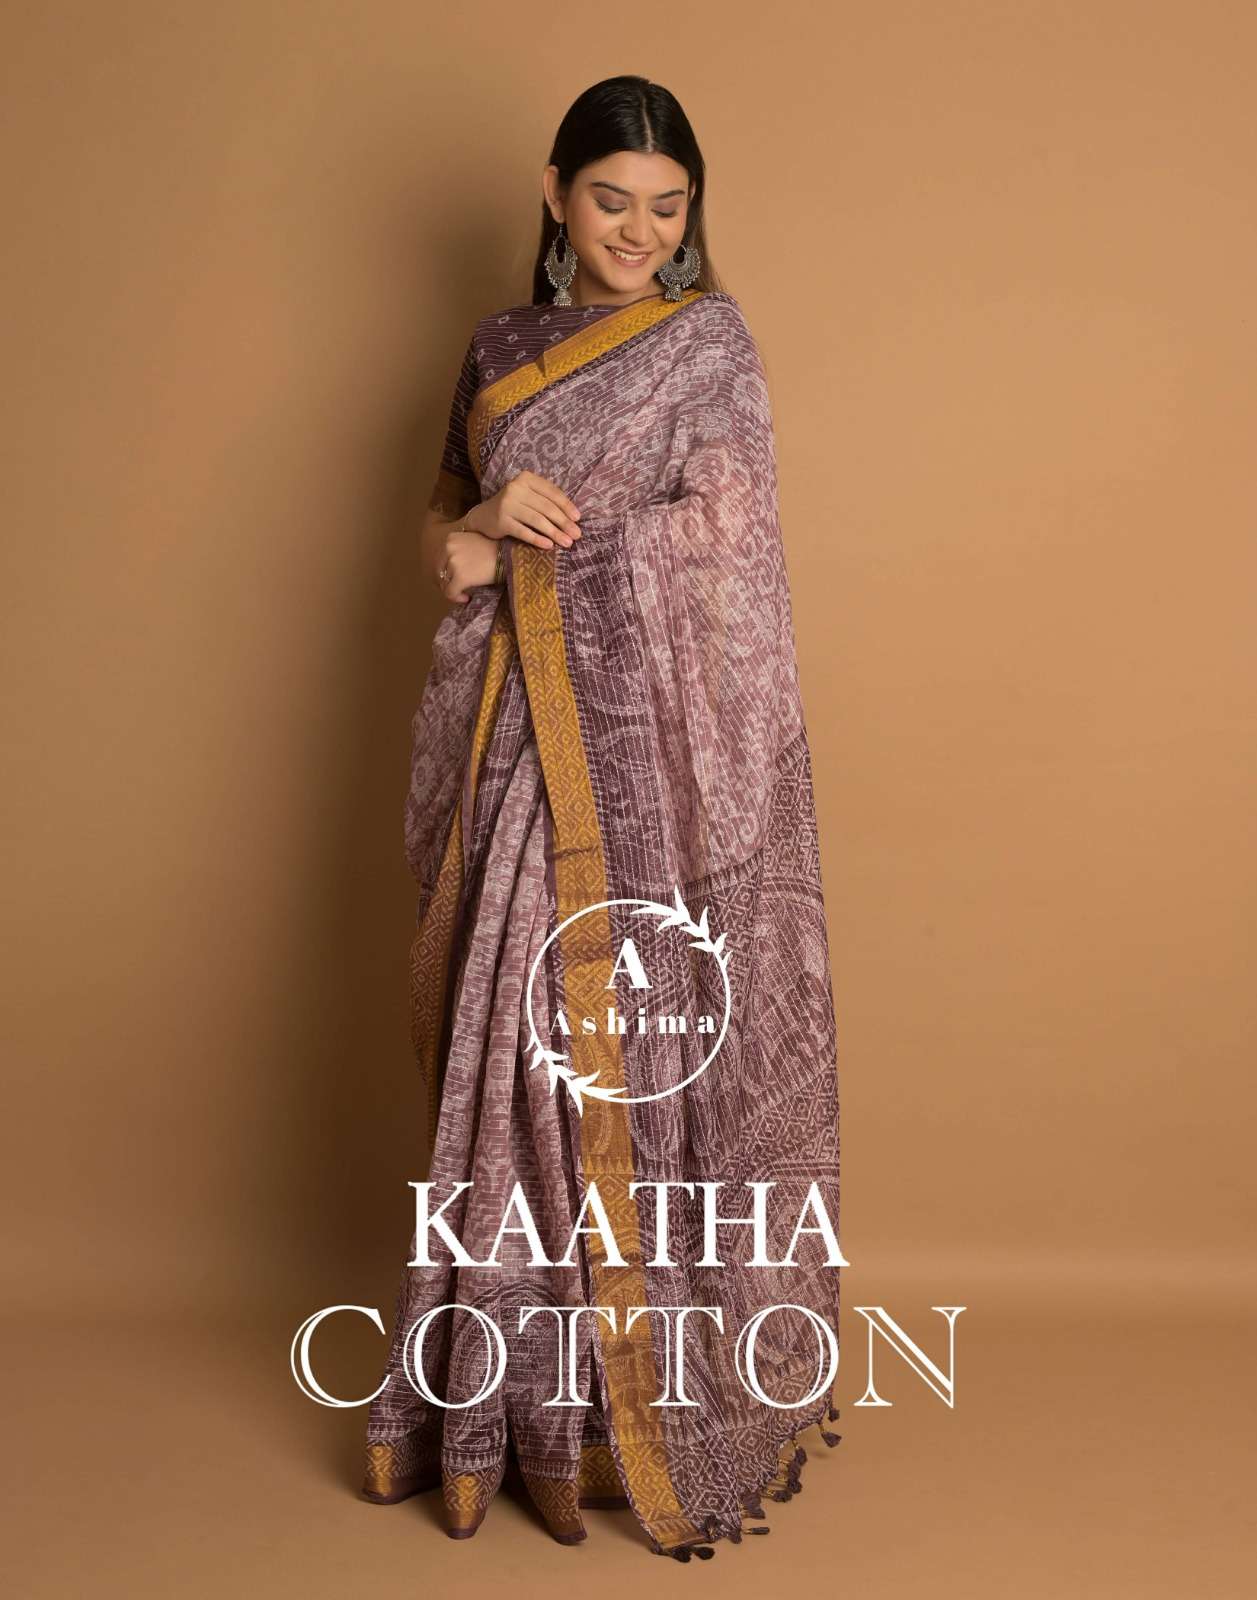 ashima kaatha cotton designer four design two matching colors saree with jari border collection 